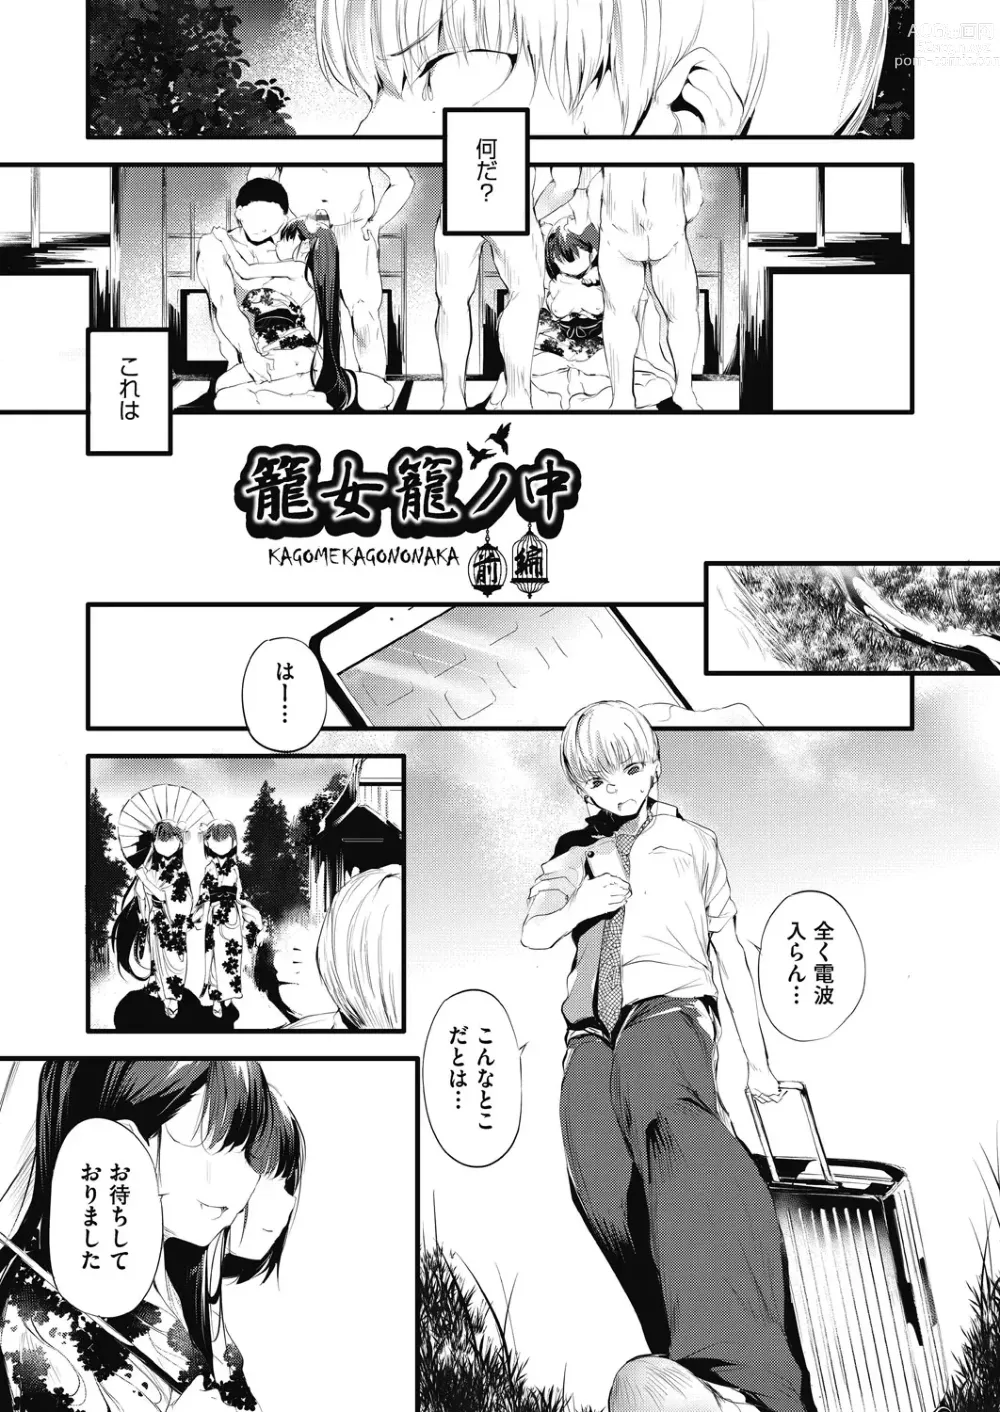 Page 9 of manga Shinme Tori - symmetry